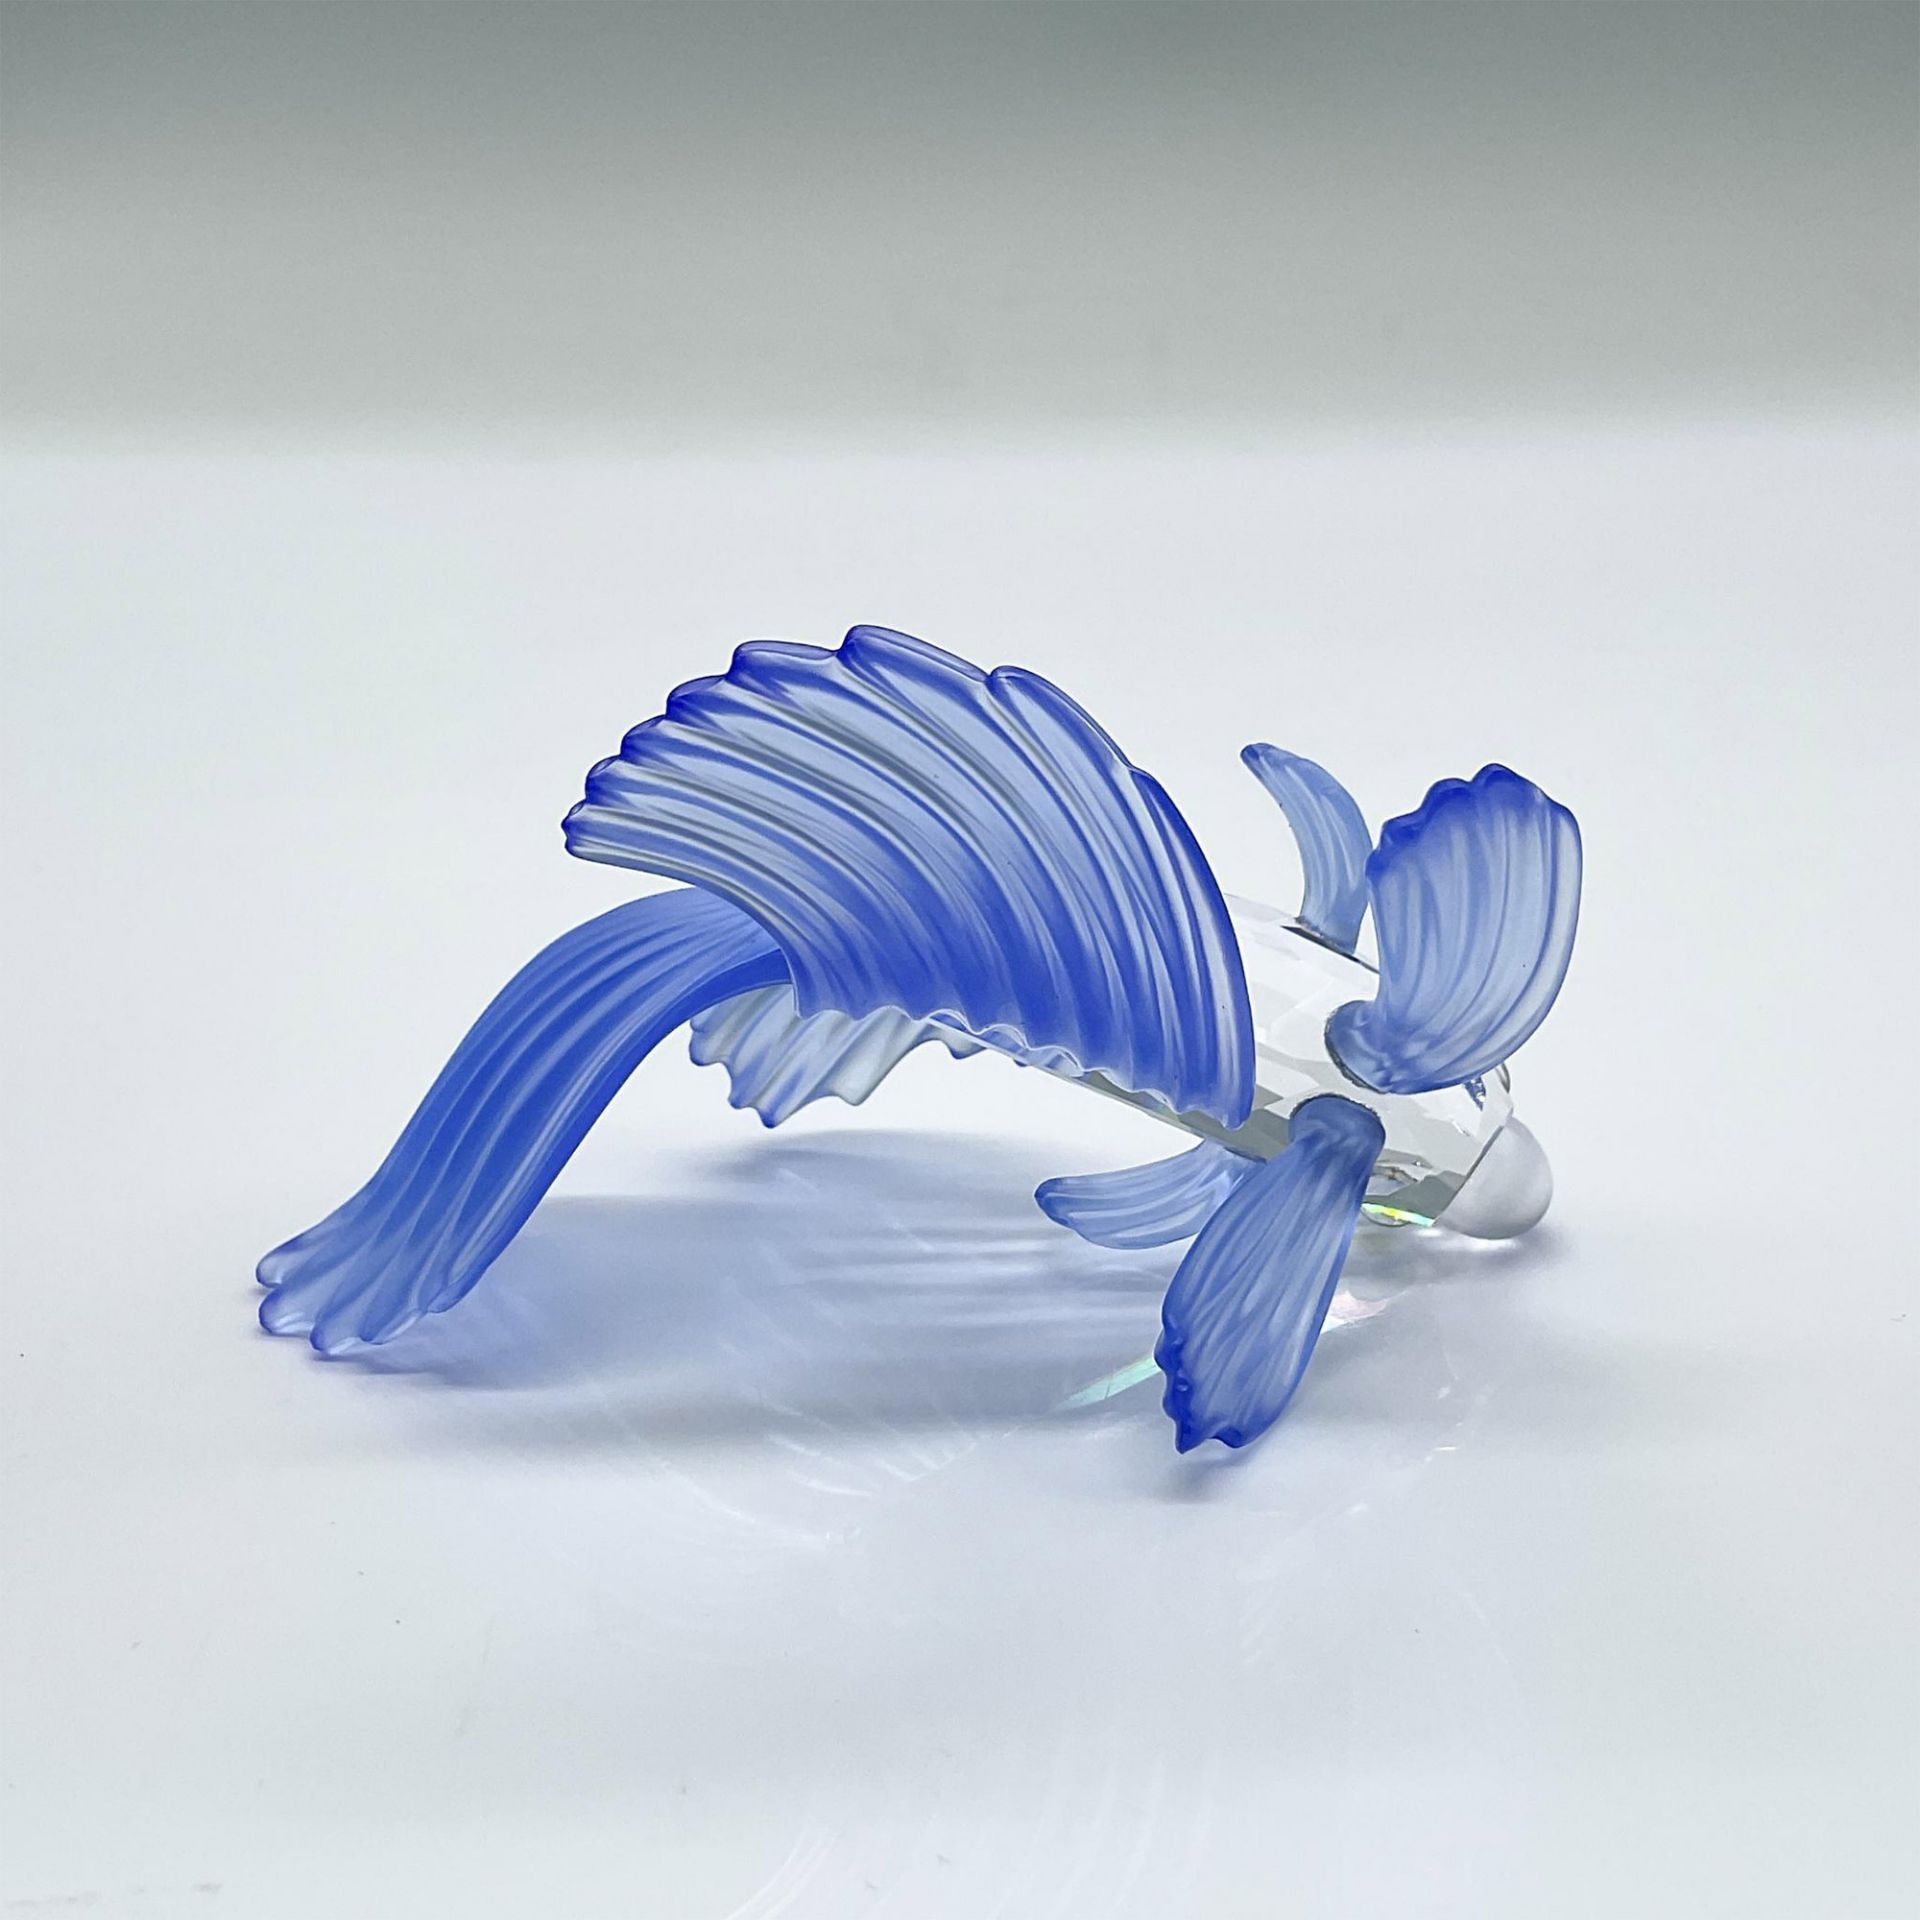 Swarovski Crystal Figurine, Siamese Fighting Fish Blue - Image 3 of 4